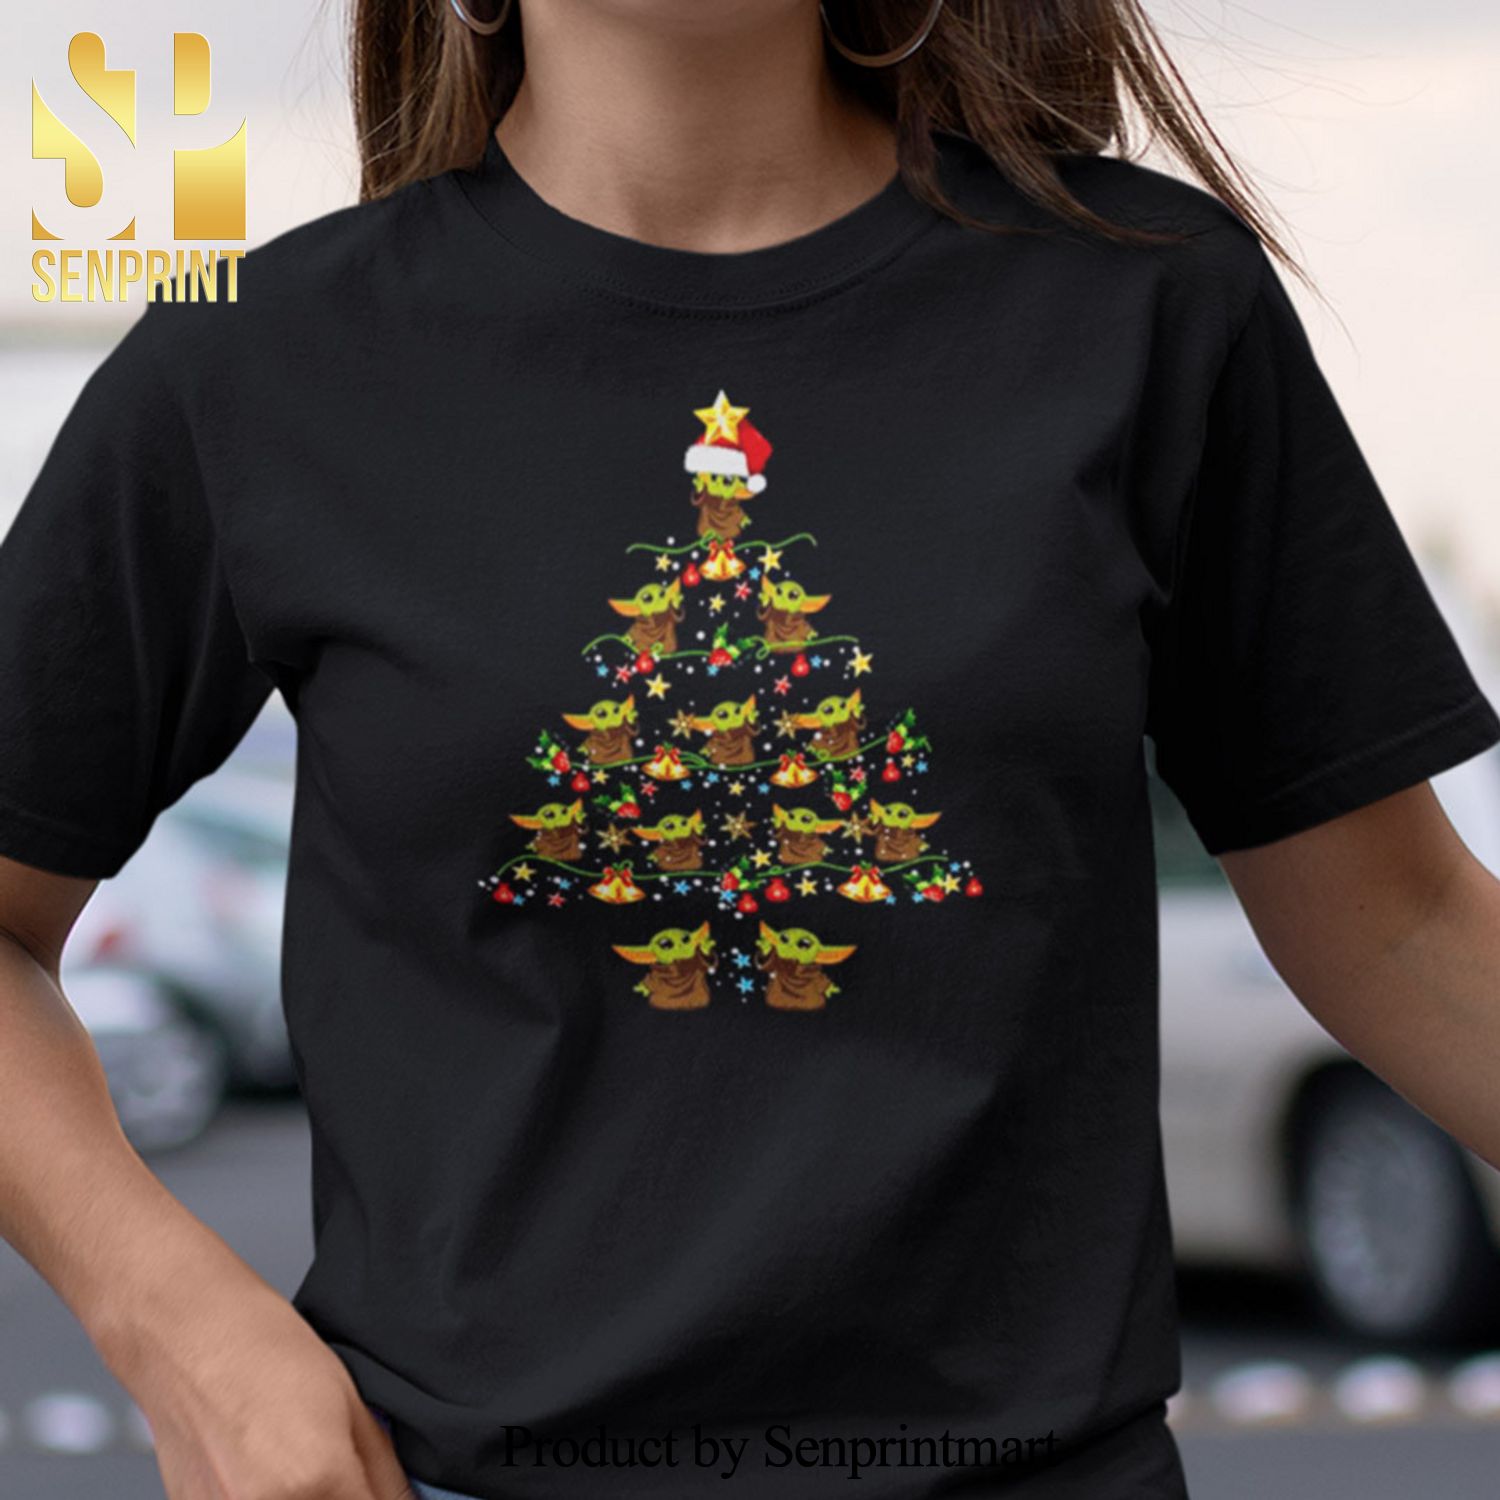 Star Wars Baby Yoda Christmas Tree Christmas Gifts Shirt